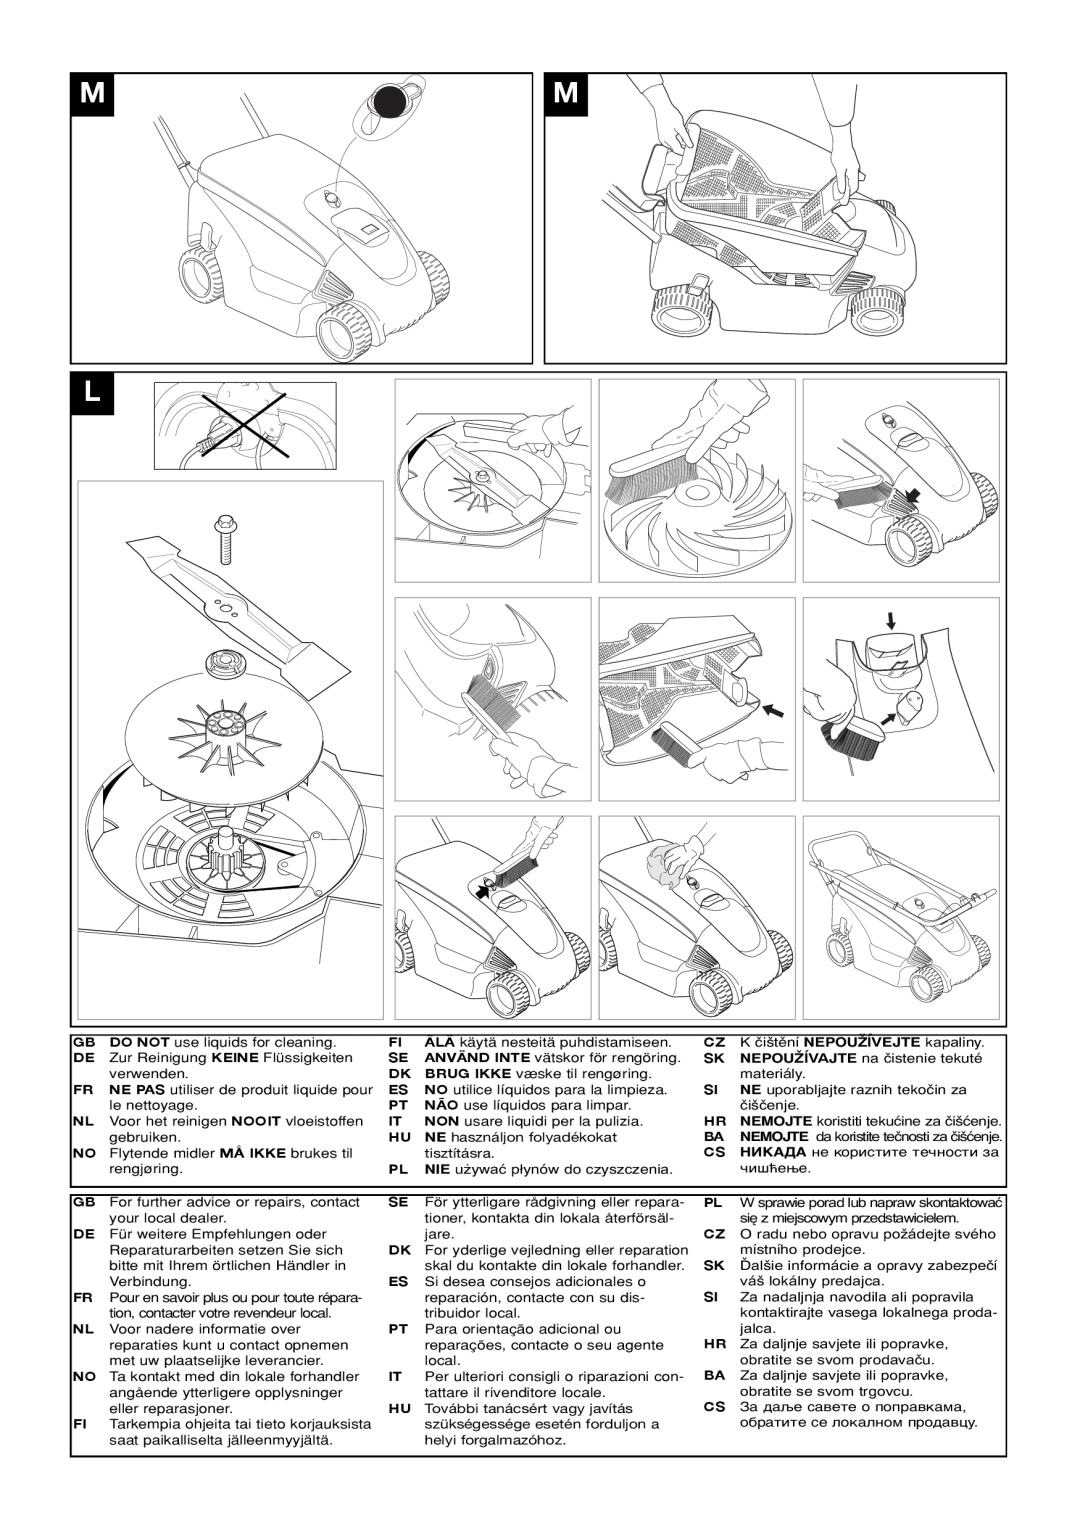 Flymo Power Compact manual 